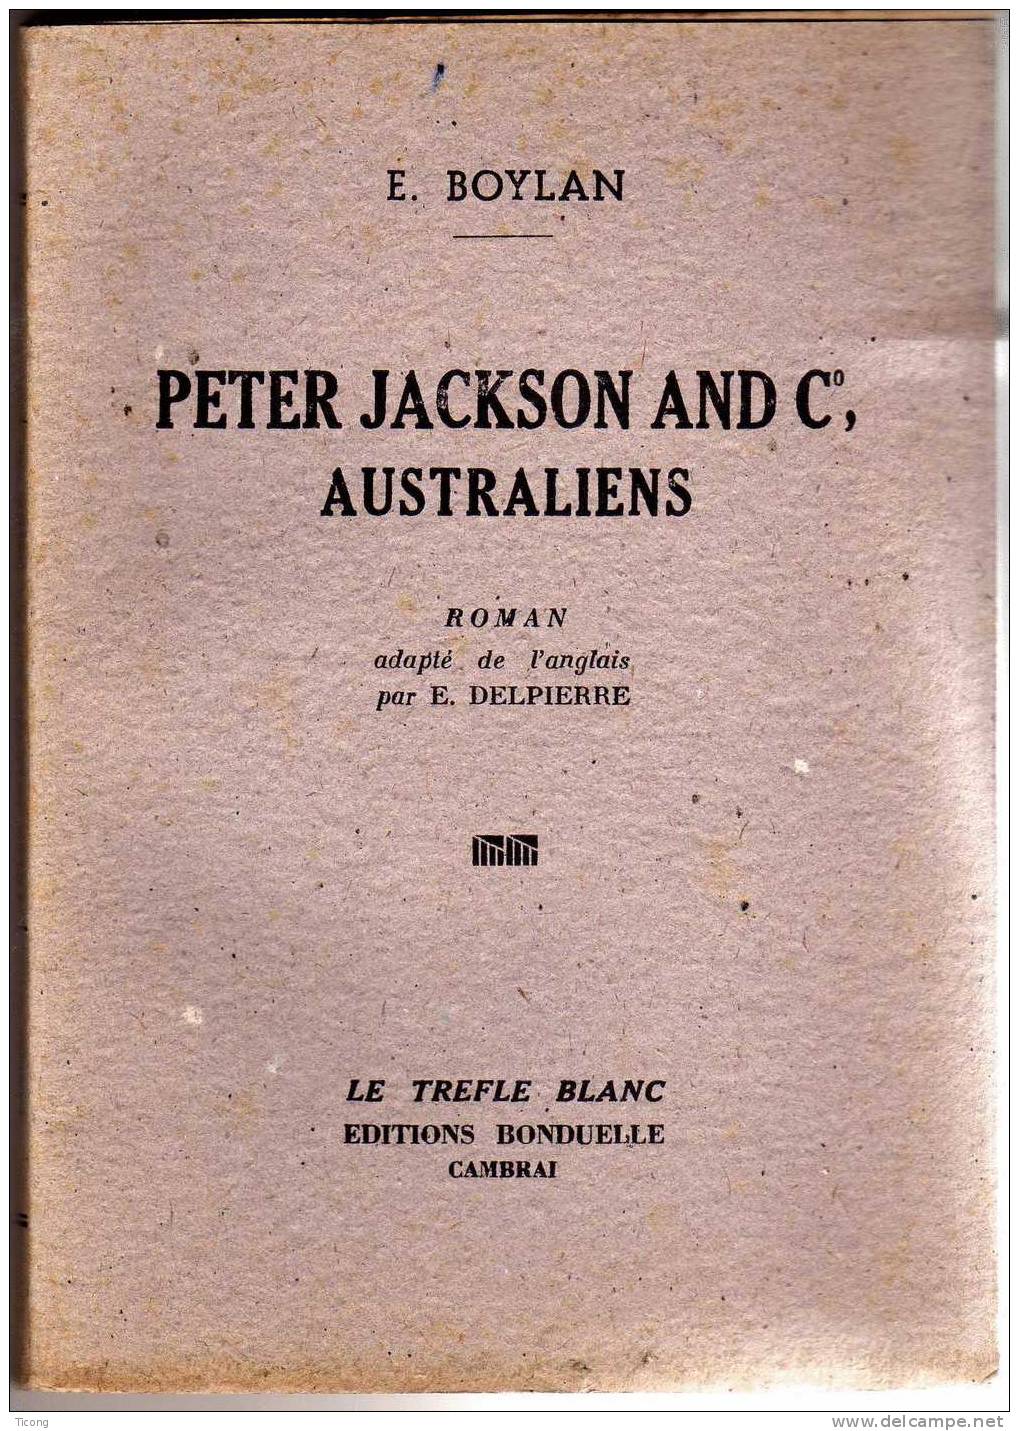 PETER JACKSON AND CO AUTRALIENS - BOYLAN, ILLUSTRATIONS F BROIE - EO 1946 LE TREFLE BLANC ED BONDUELLE CAMBRAI JAQUETTE - Scouting